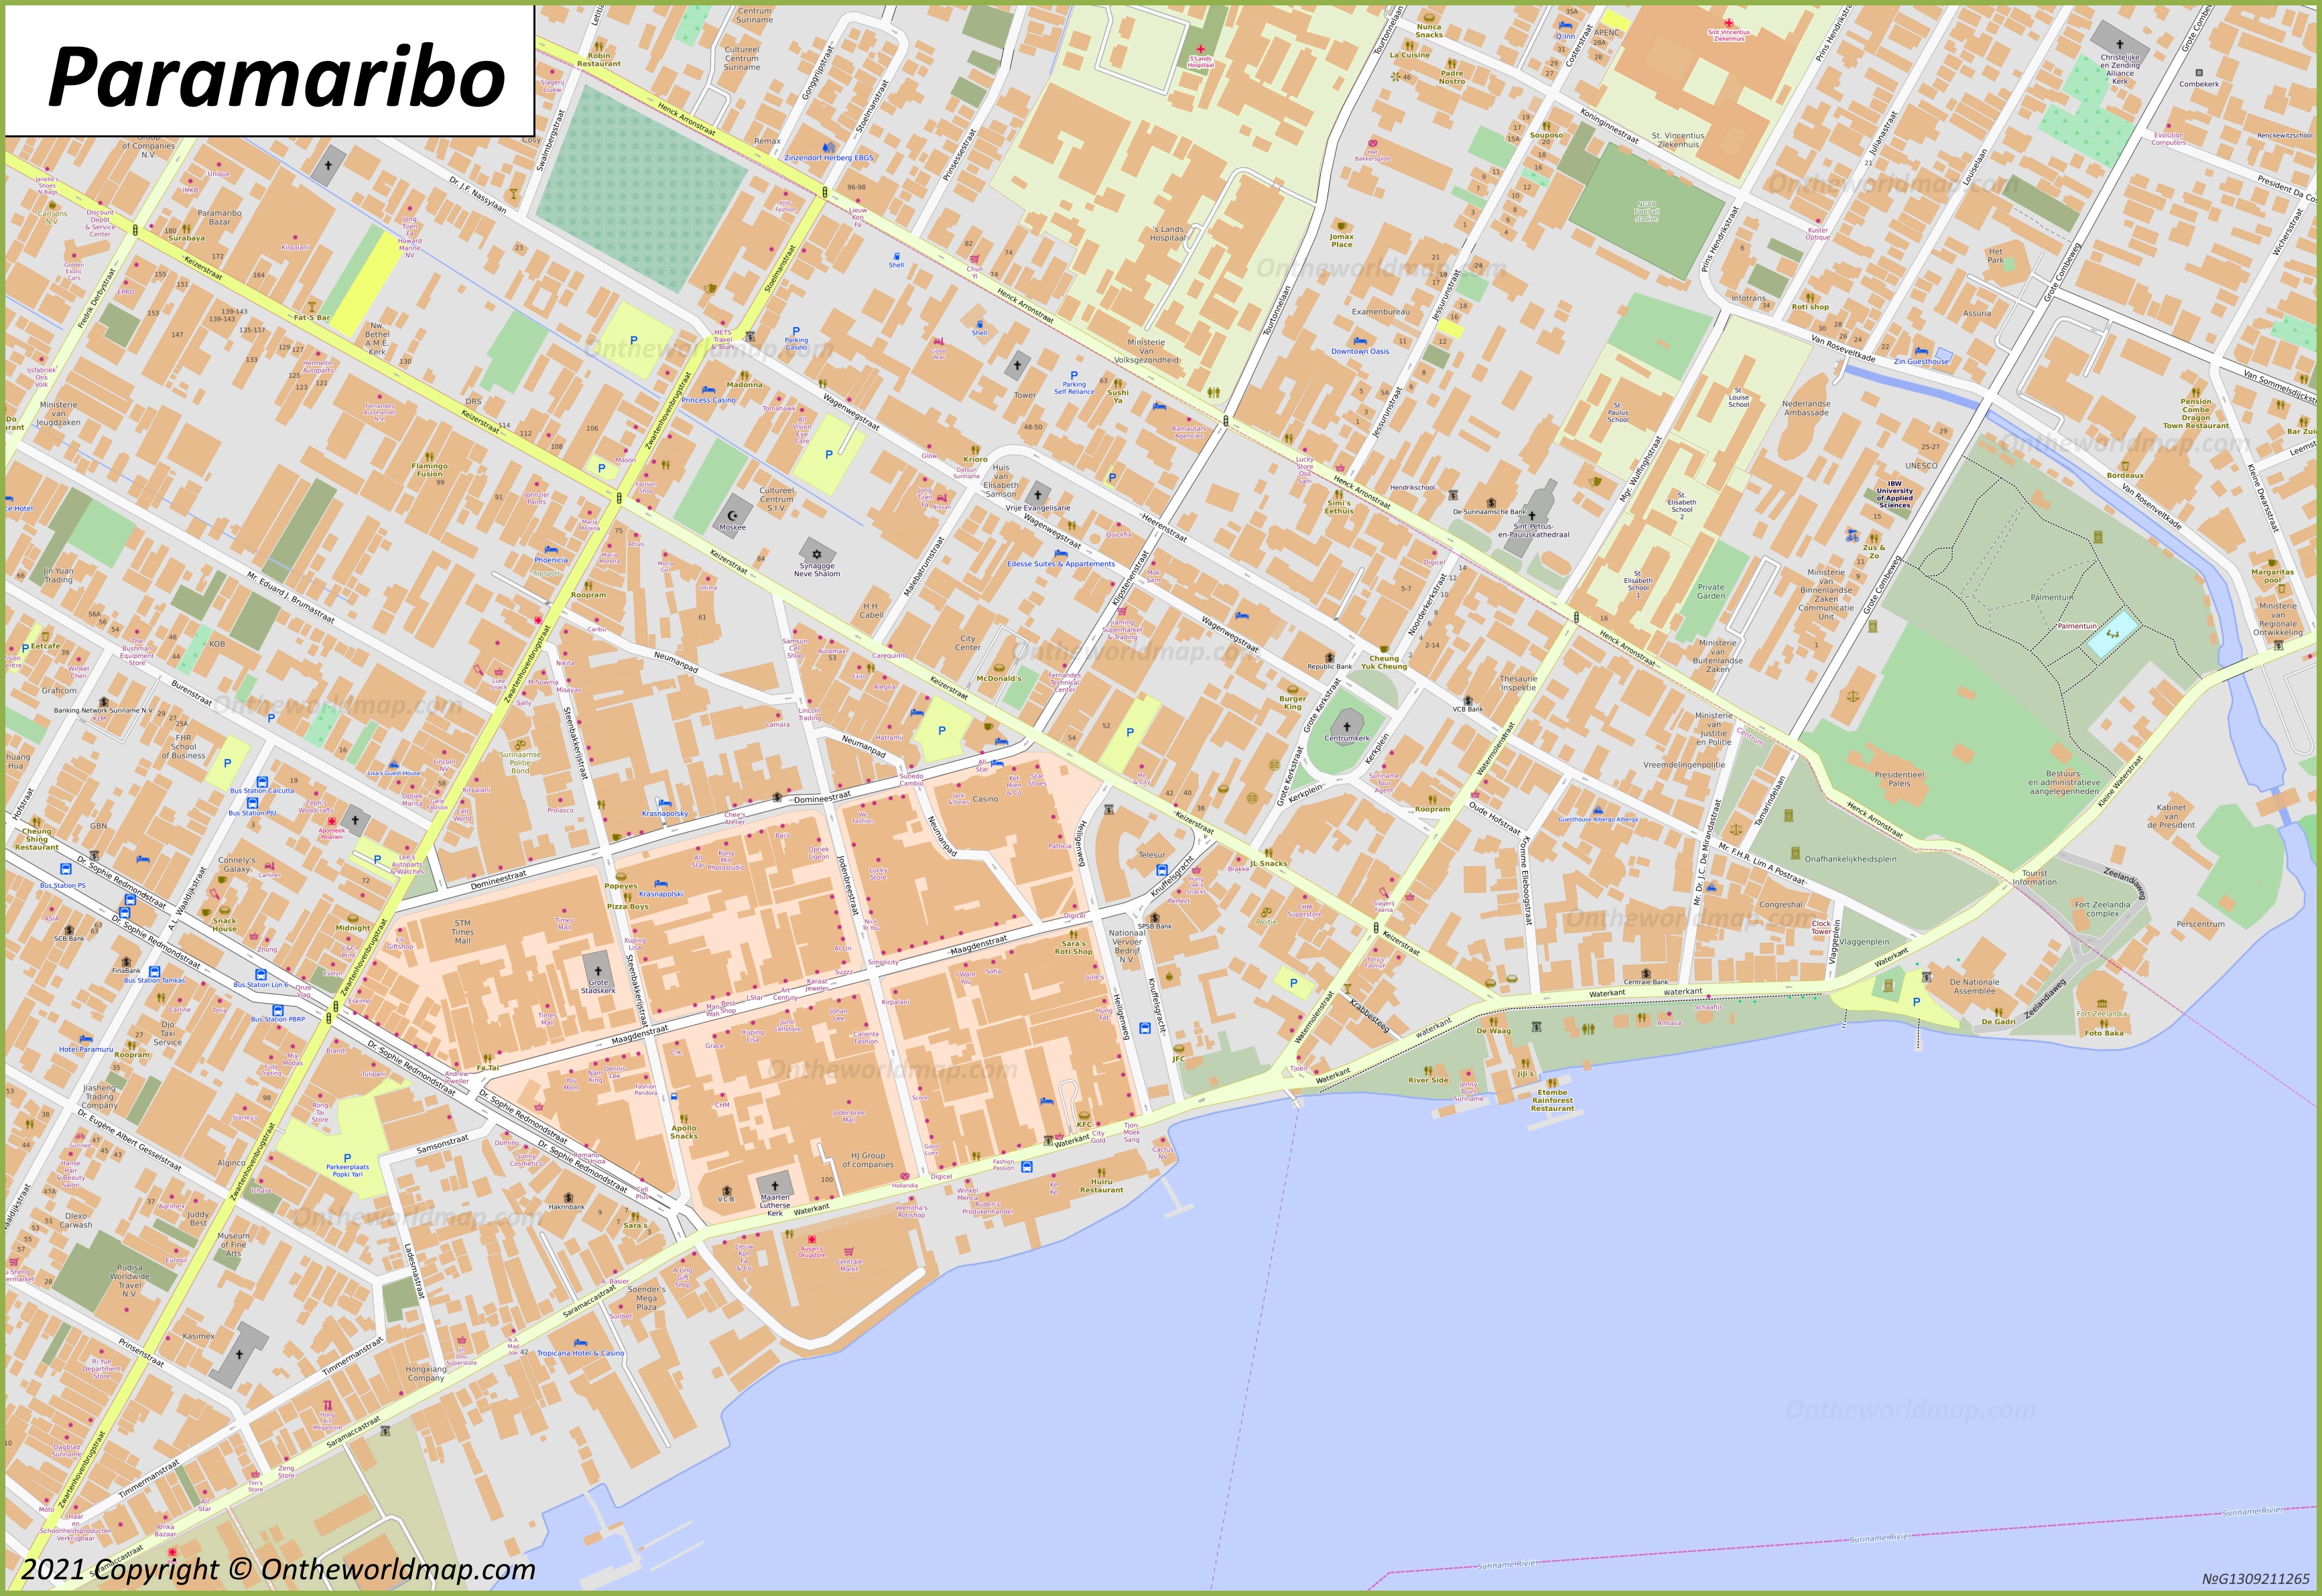 Paramaribo City Center Map